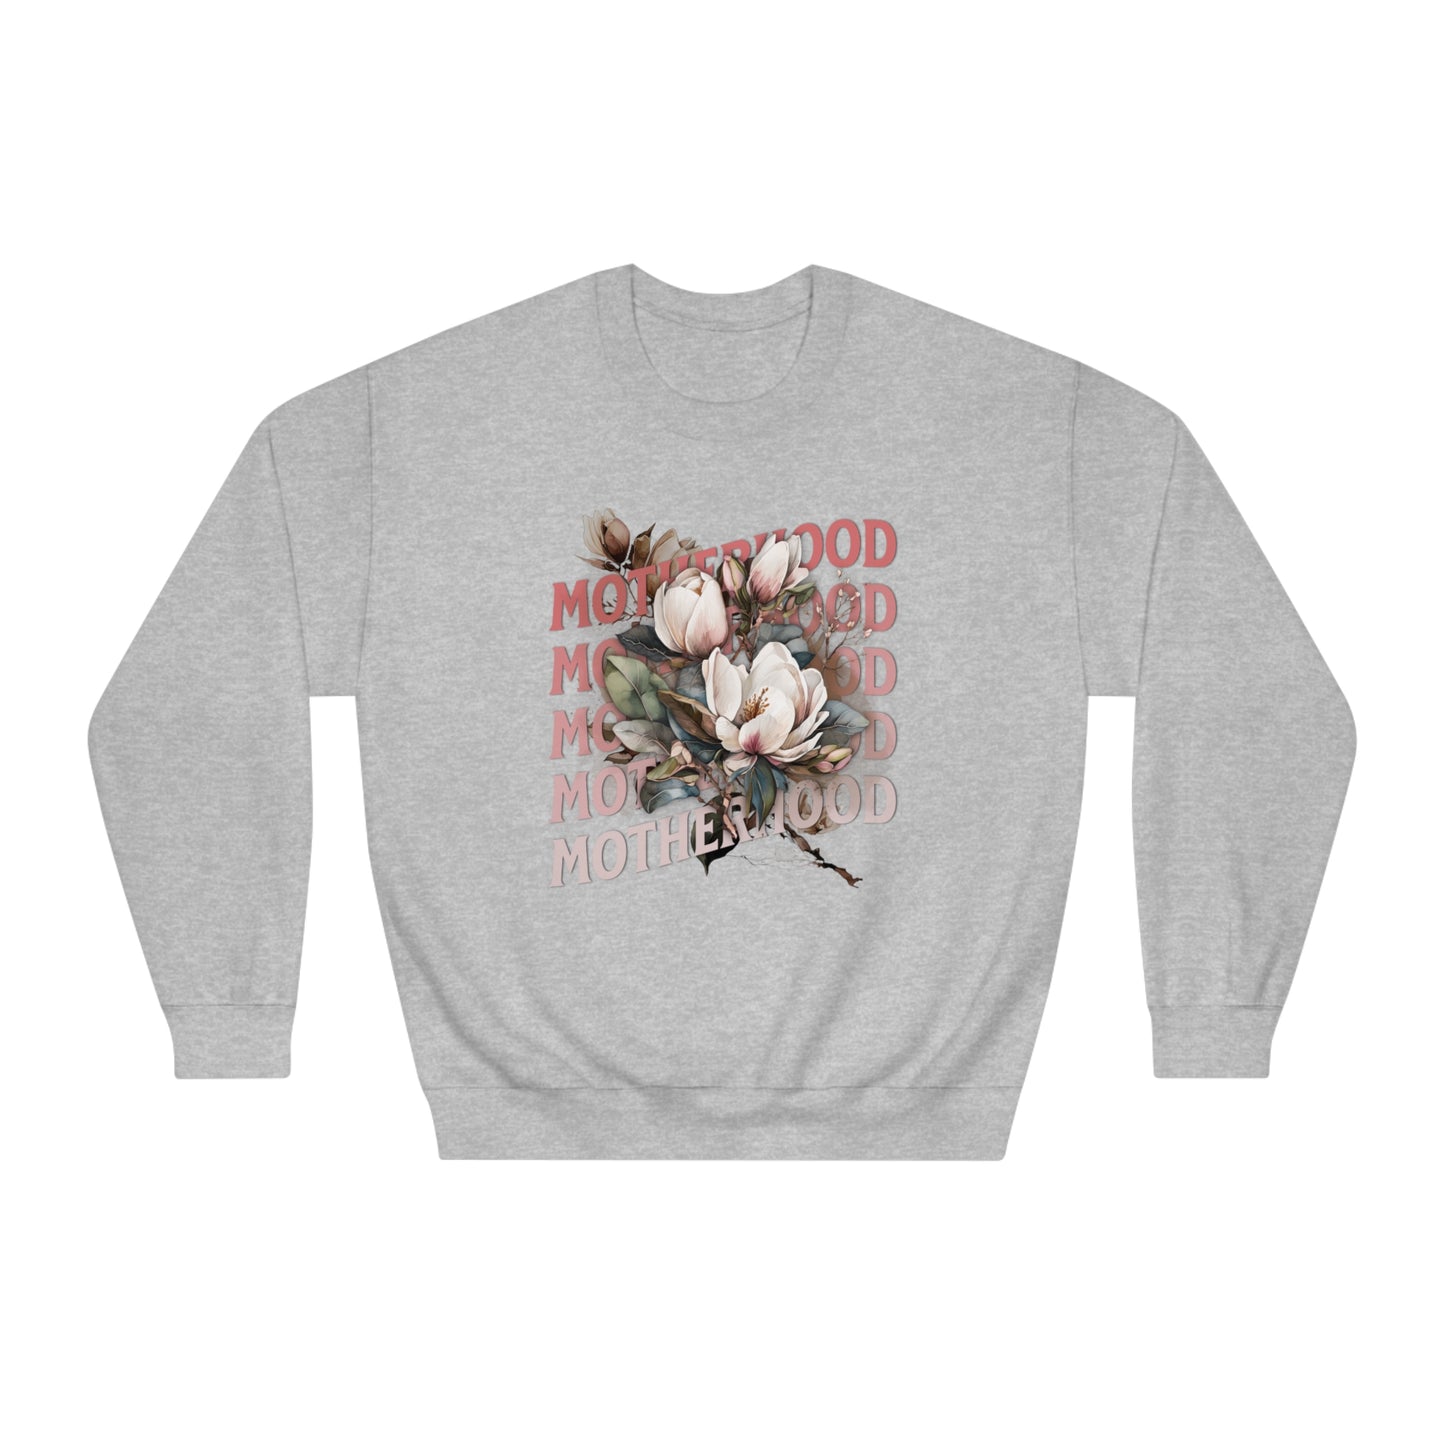 Motherhood floral sweatshirt